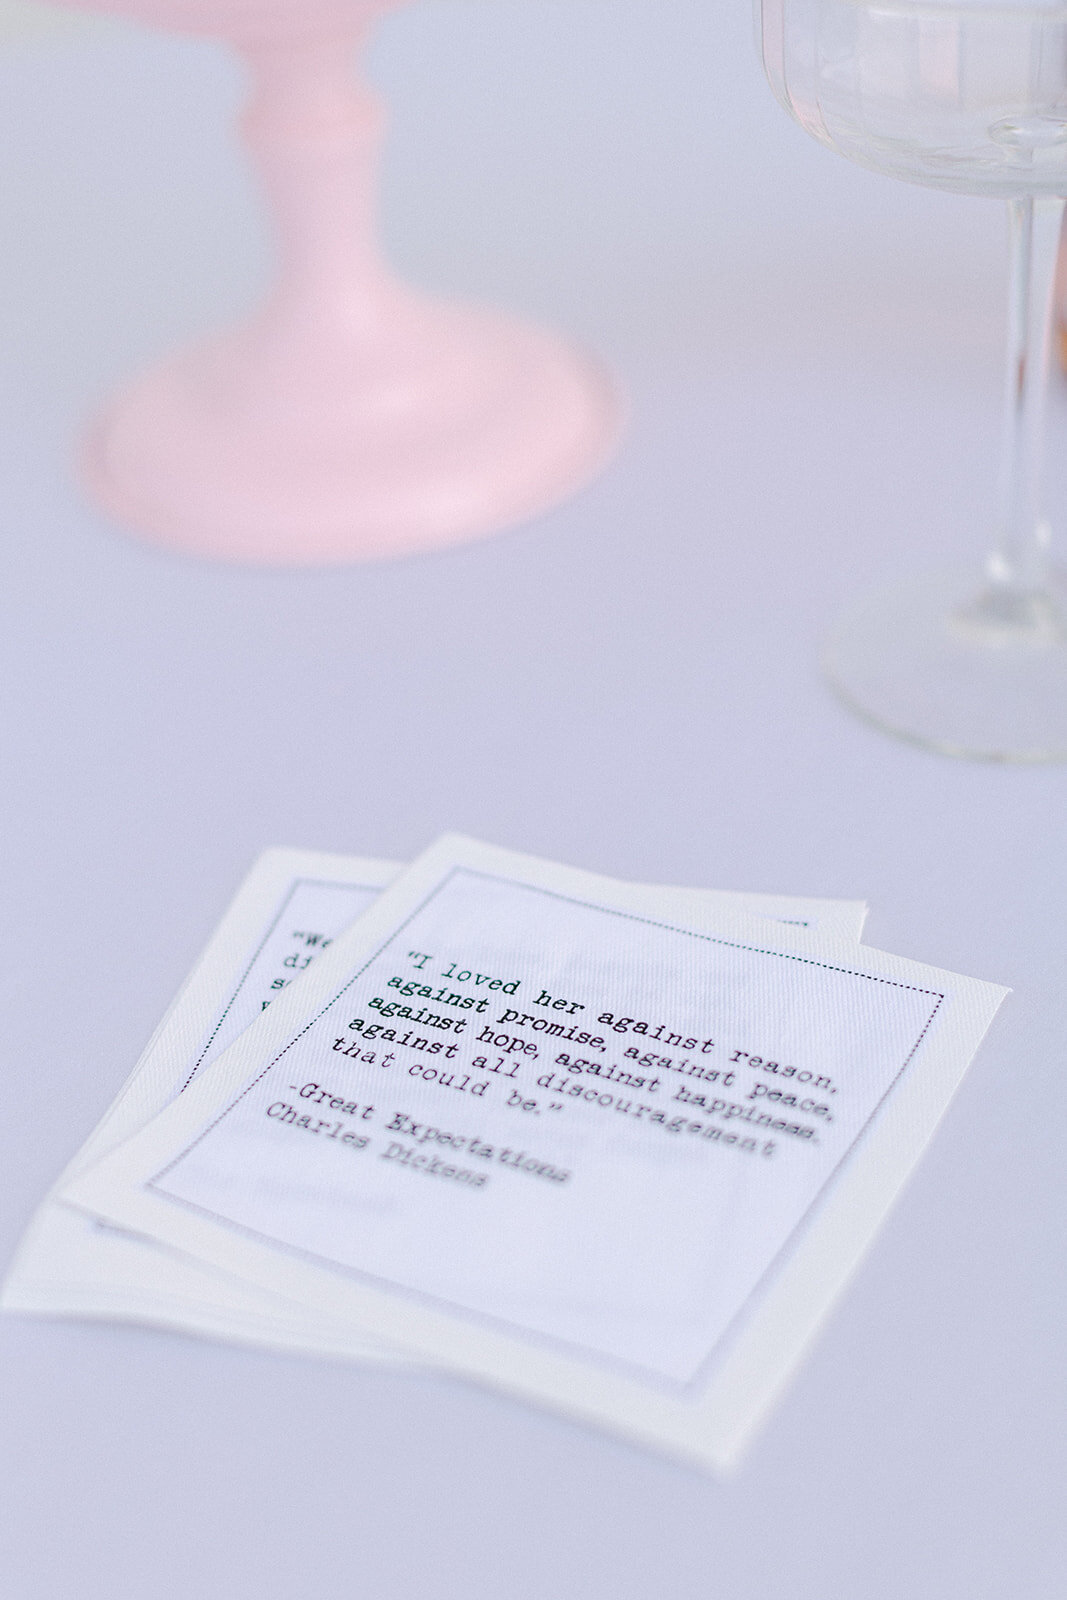 quote-cocktail-napkin-wedding-details